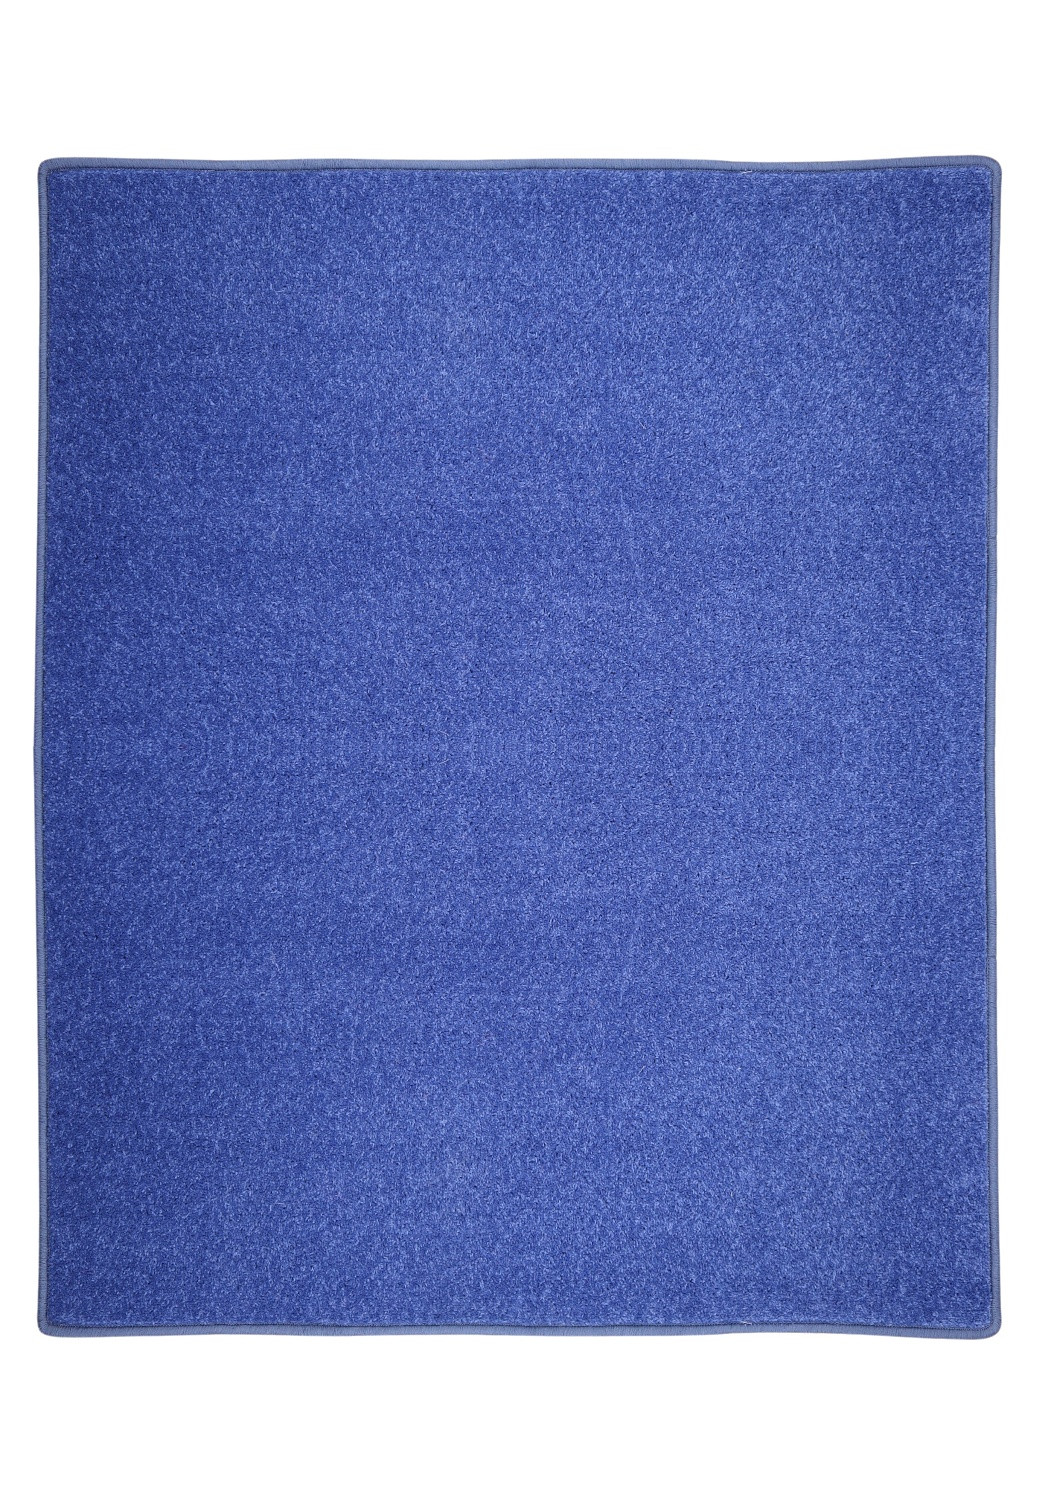 Kusový koberec Eton modrý 82 - 400x500 cm Vopi koberce 